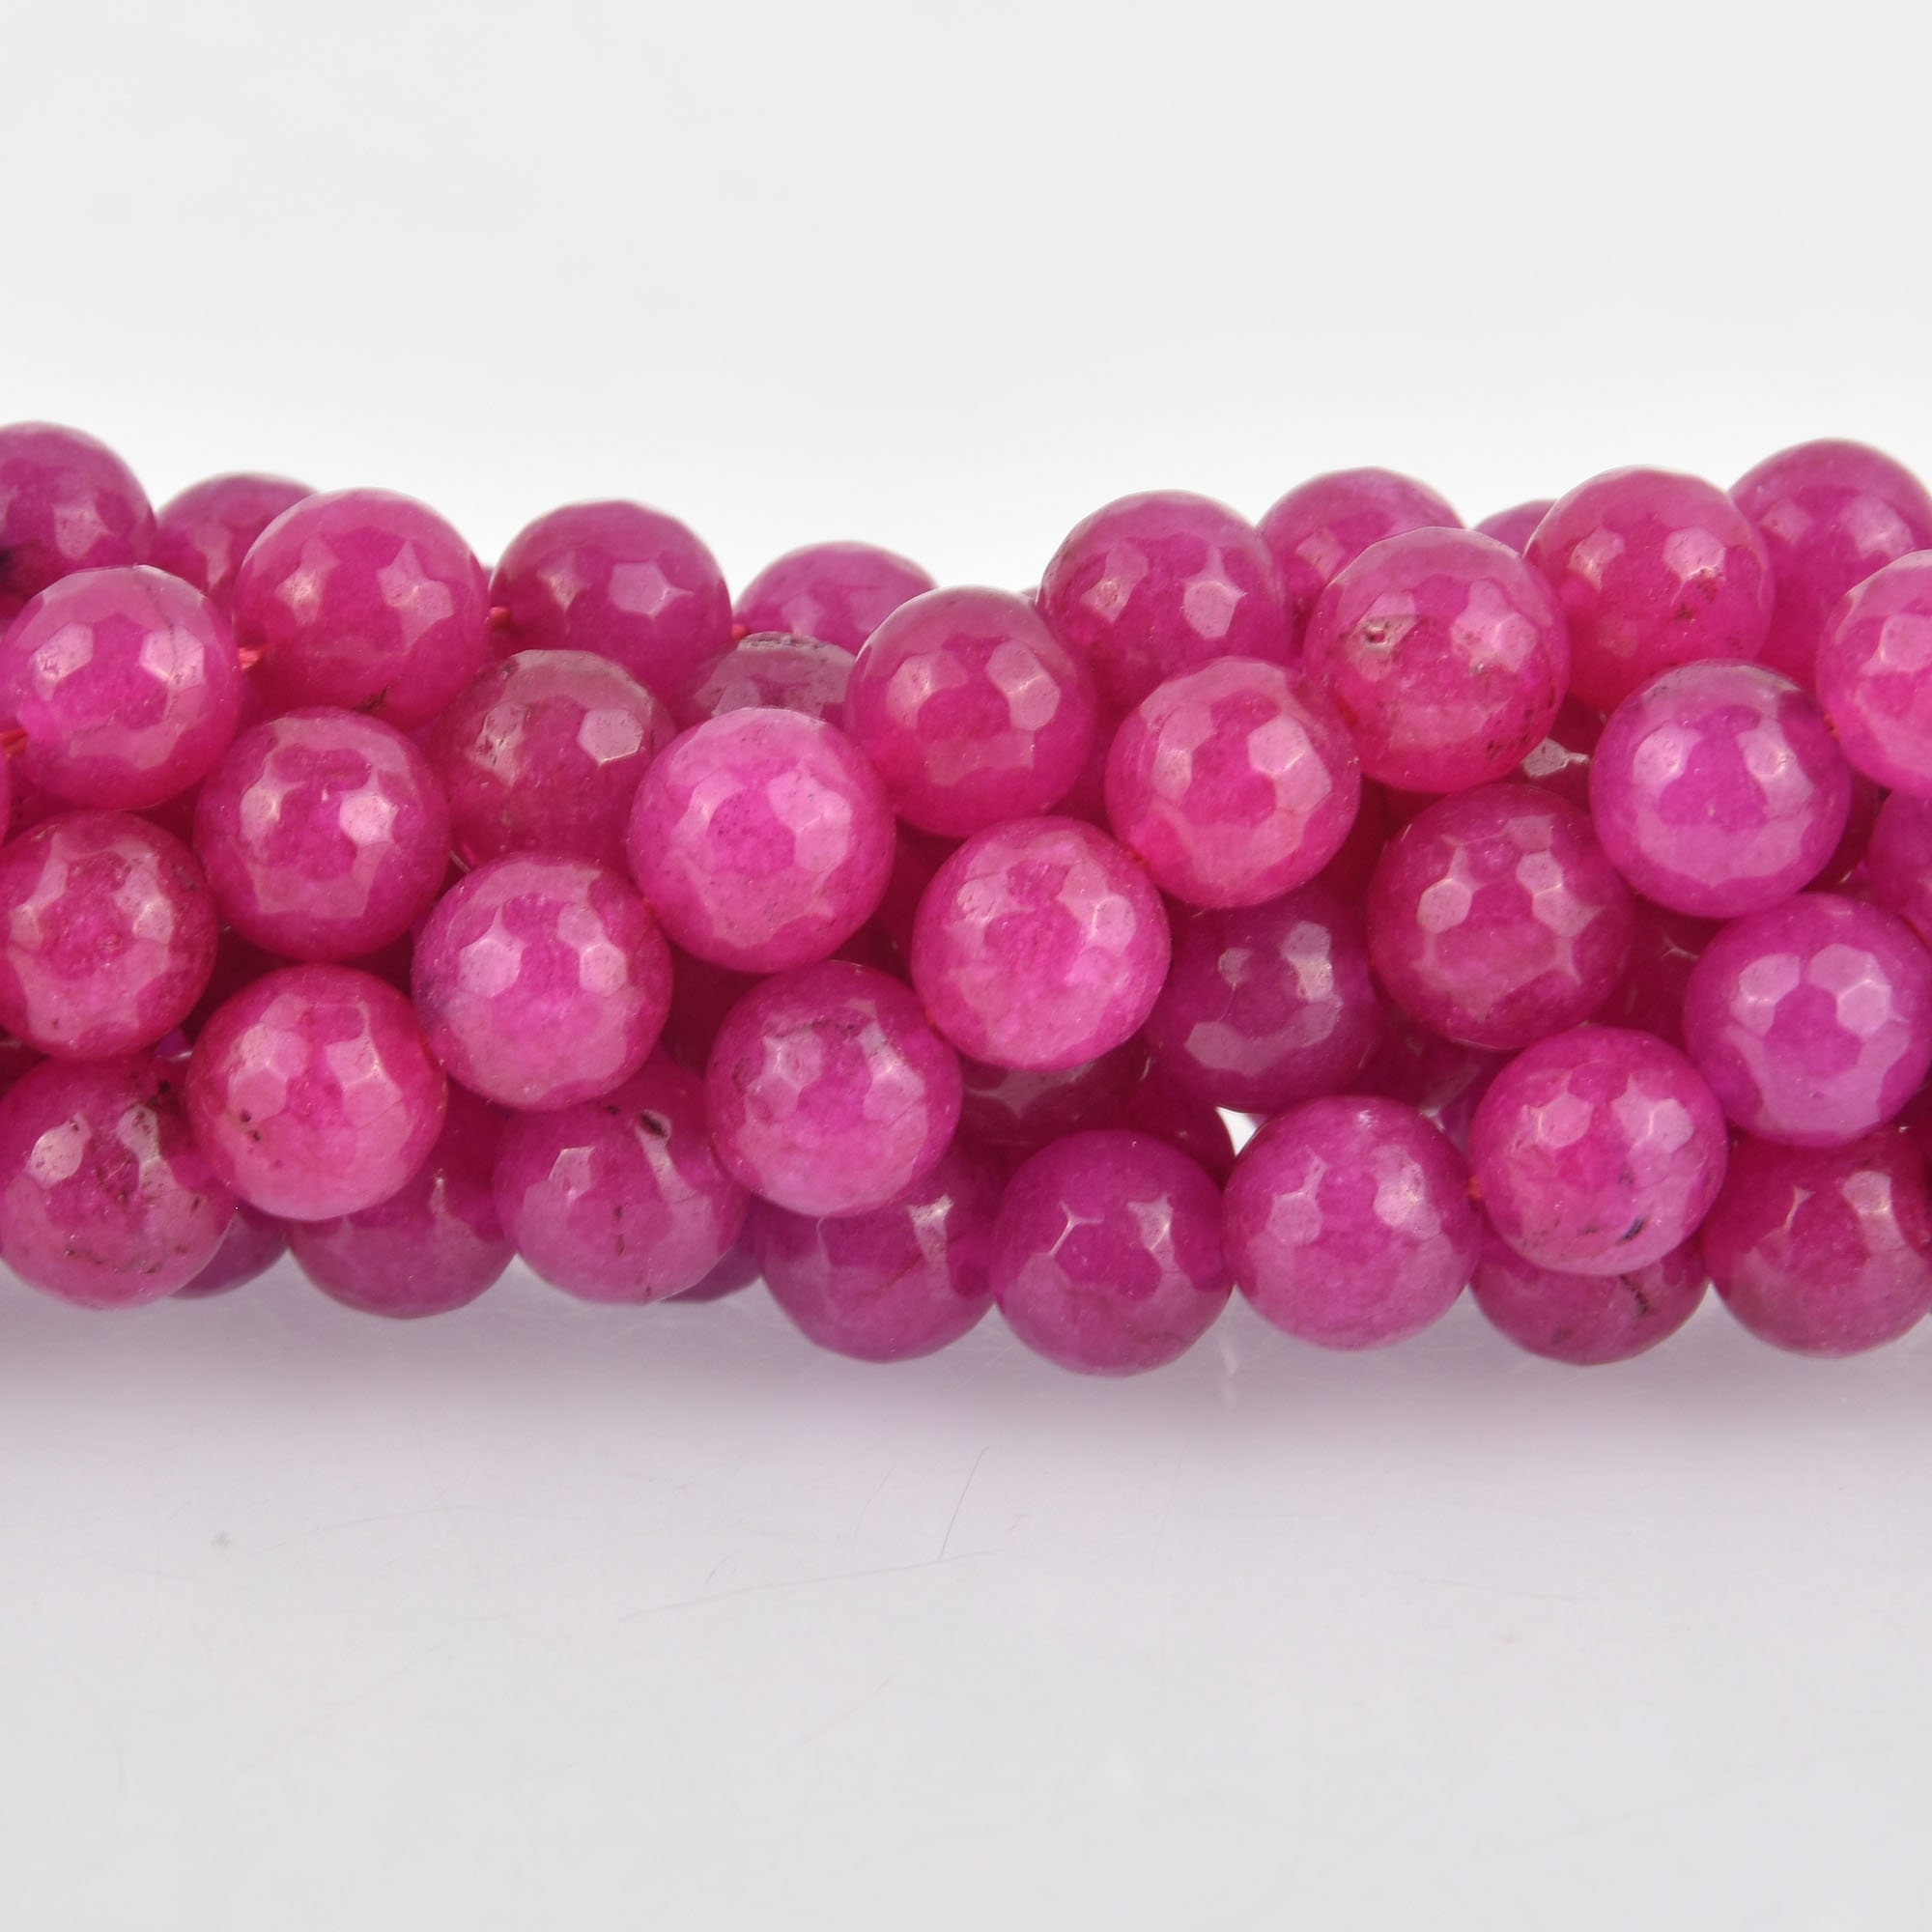 Pastel Acrylic Gems Bead Landing Jewels 7.6 Oz Pink / Green Rhinestones